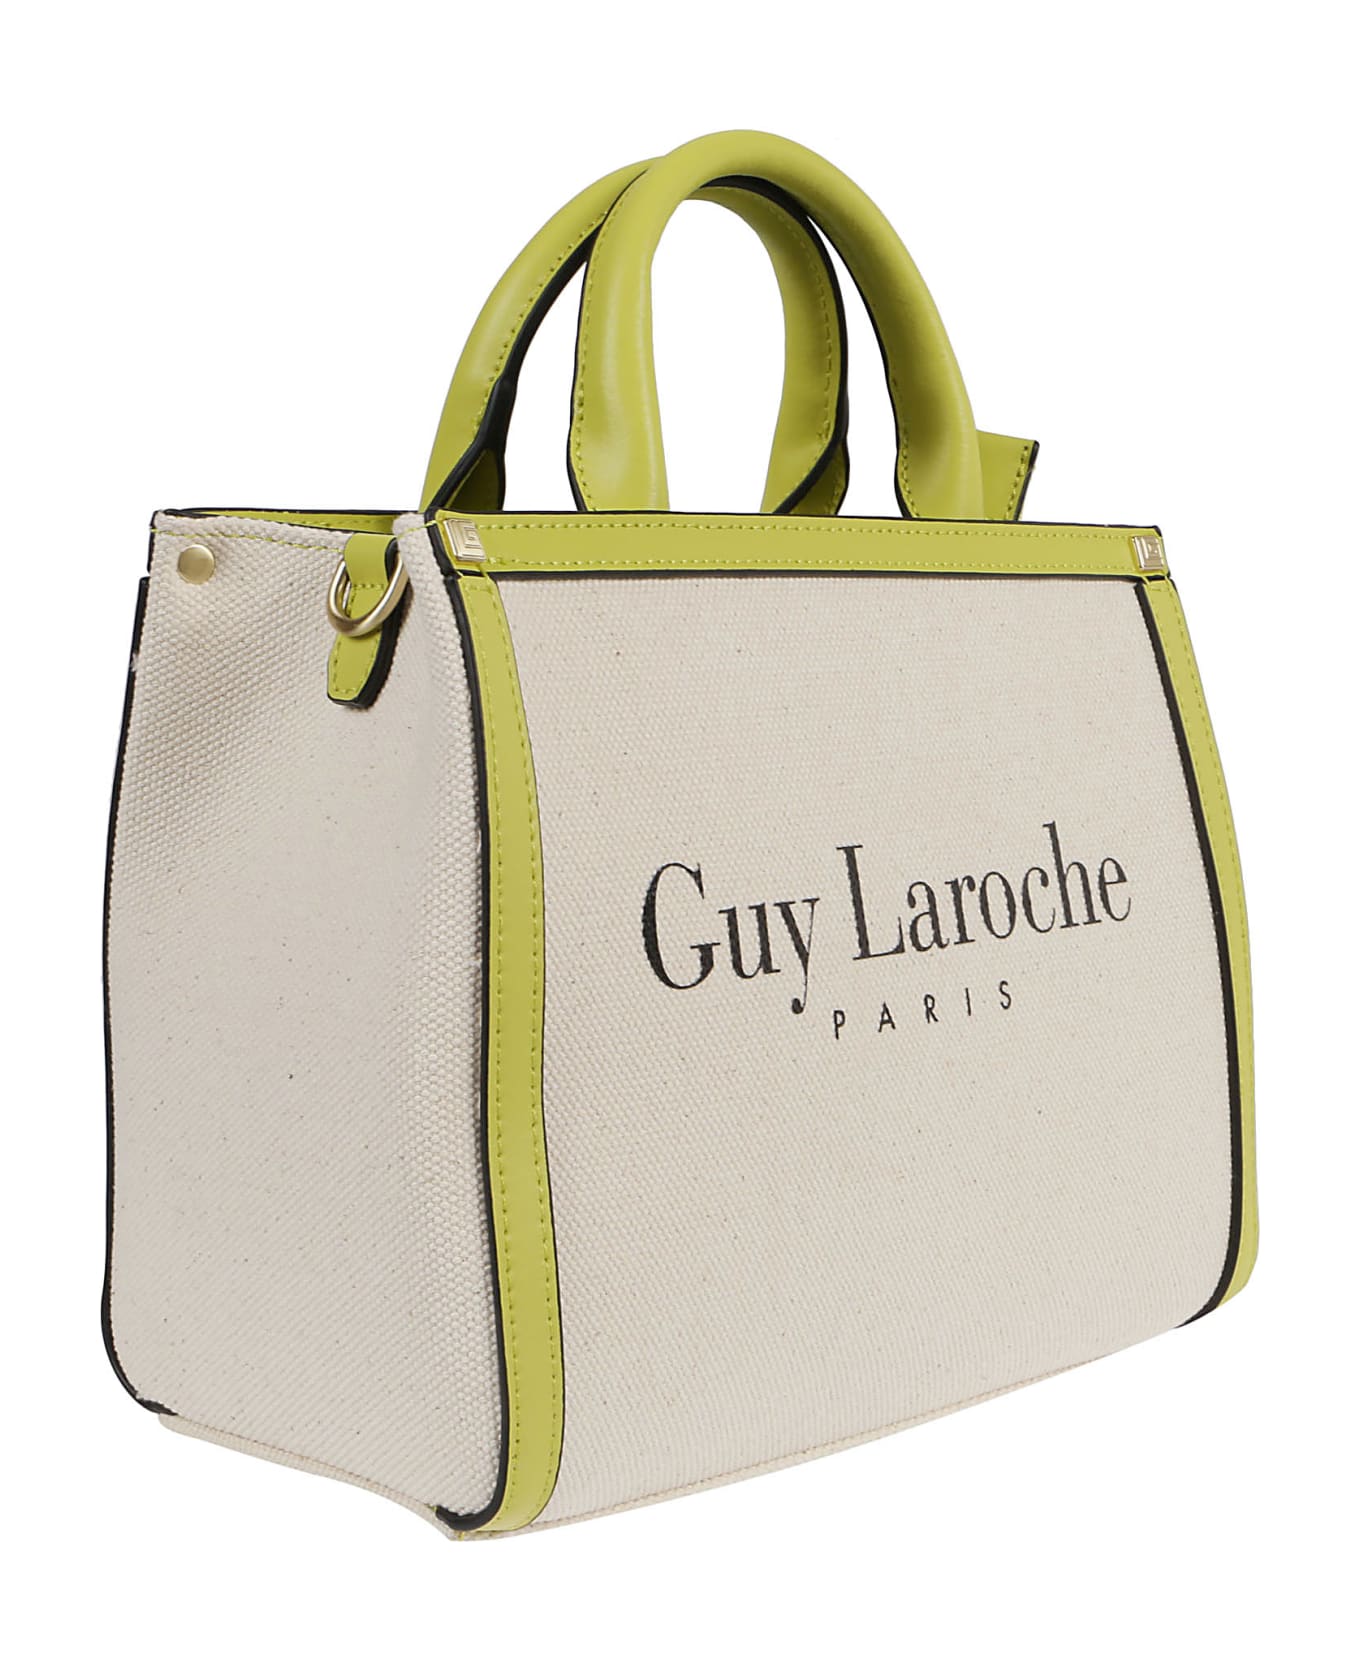 Guy Laroche Small Tote Bag - Natural/lime